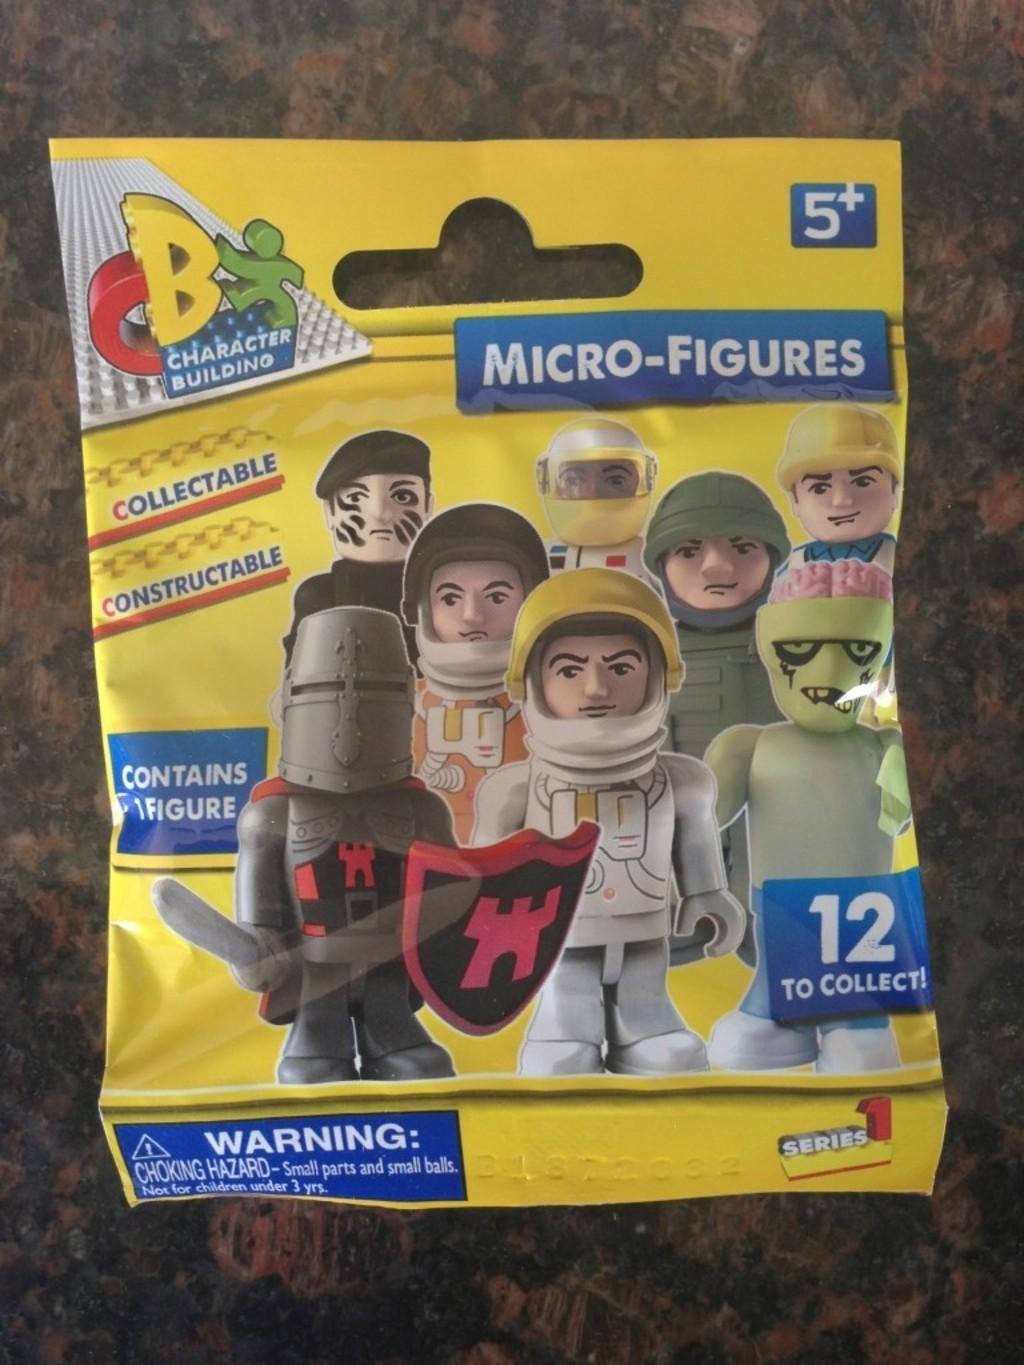 Character Building Micro-Figures